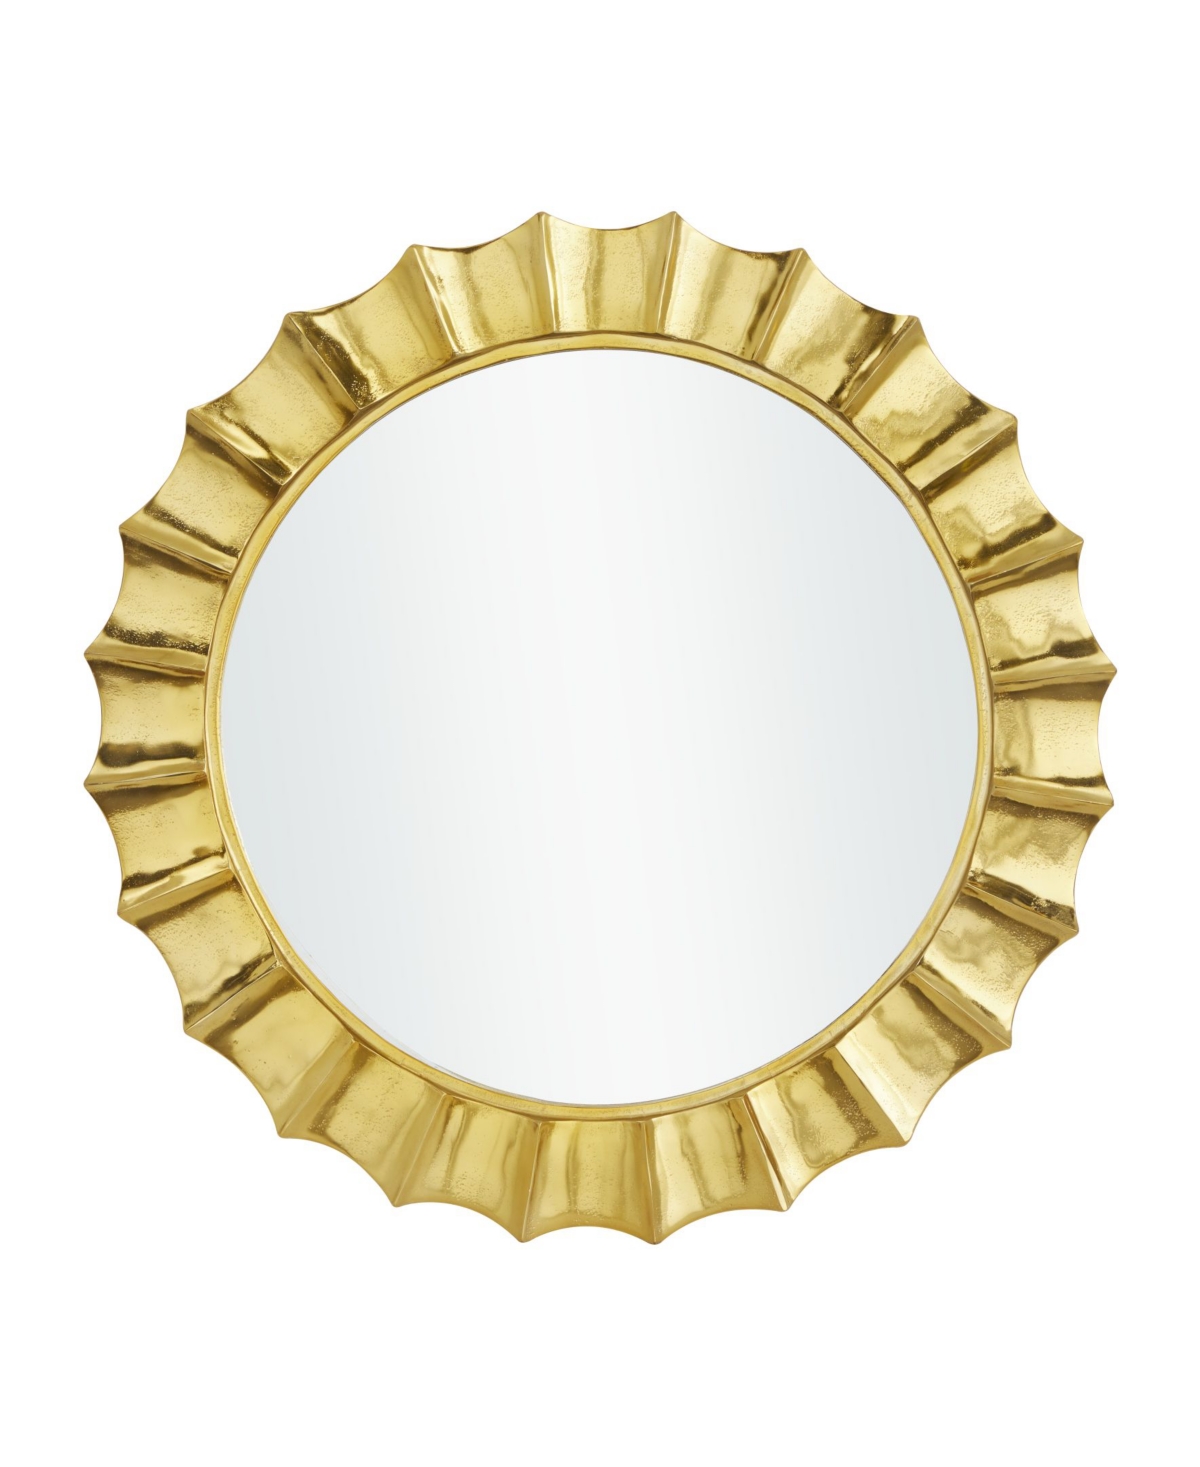 Glam Wall Mirror, 35" x 35" - Gold-Tone